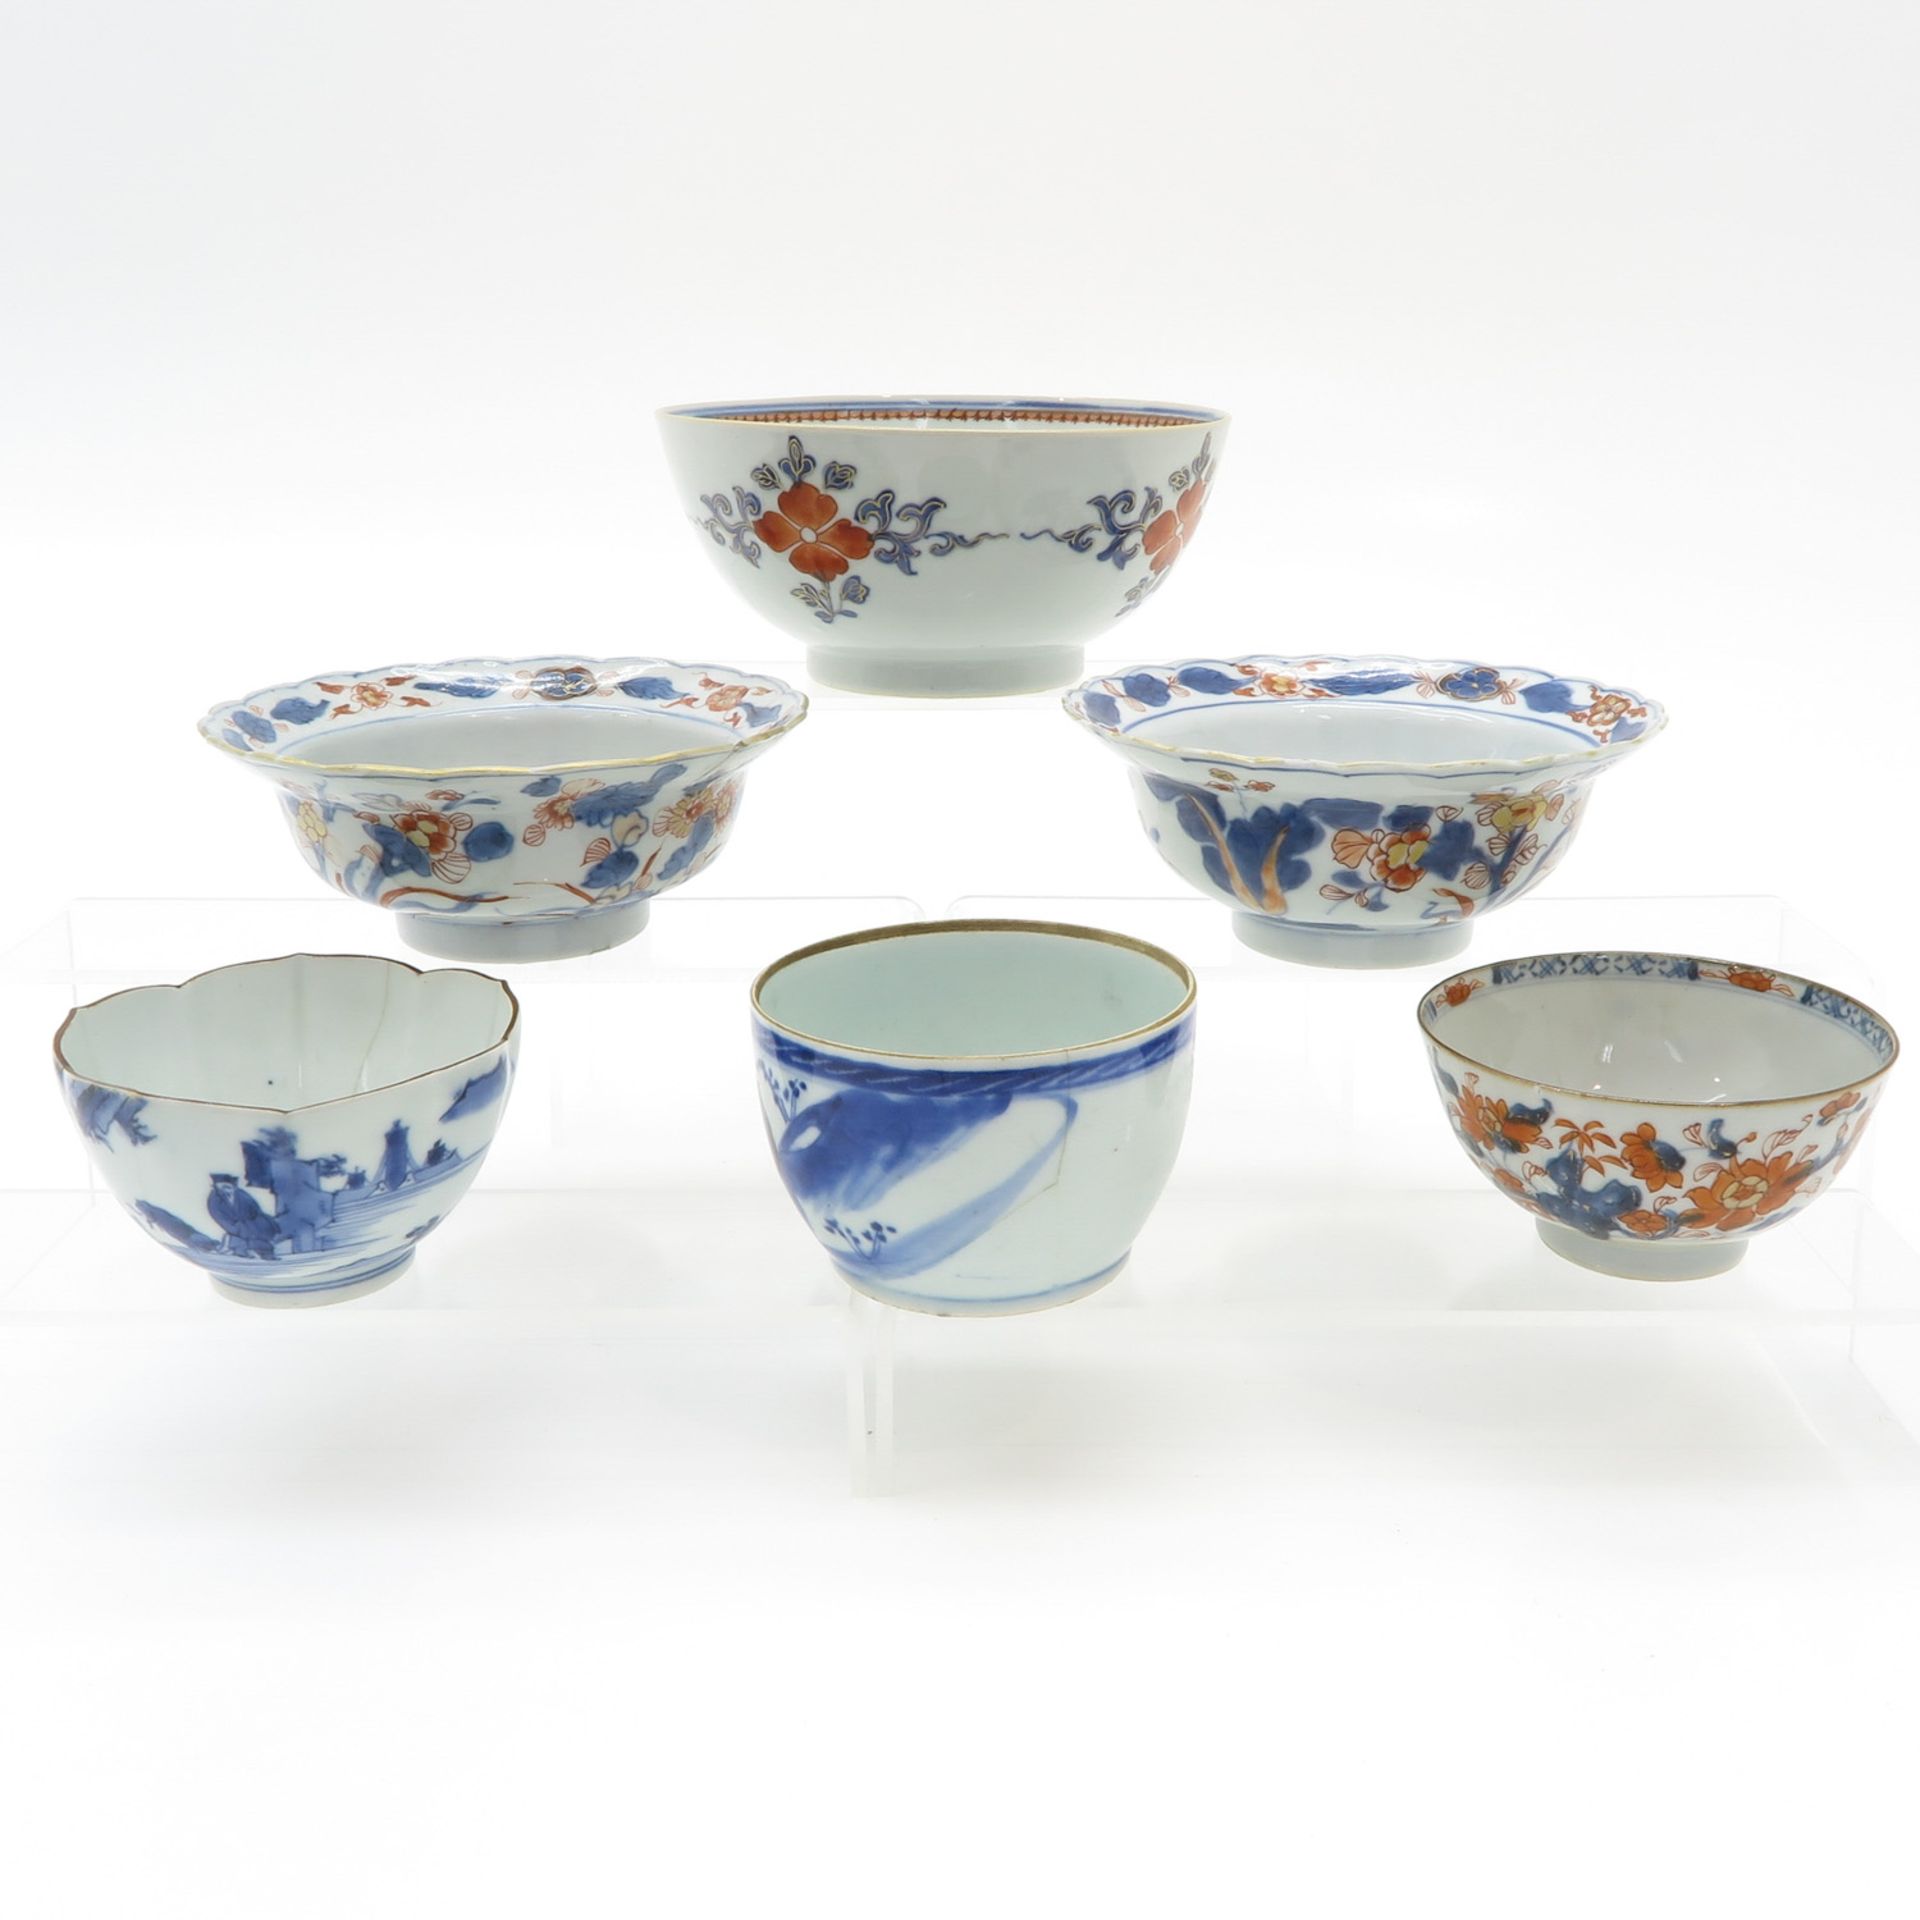 Lot of 6 China Porcelain Bowls